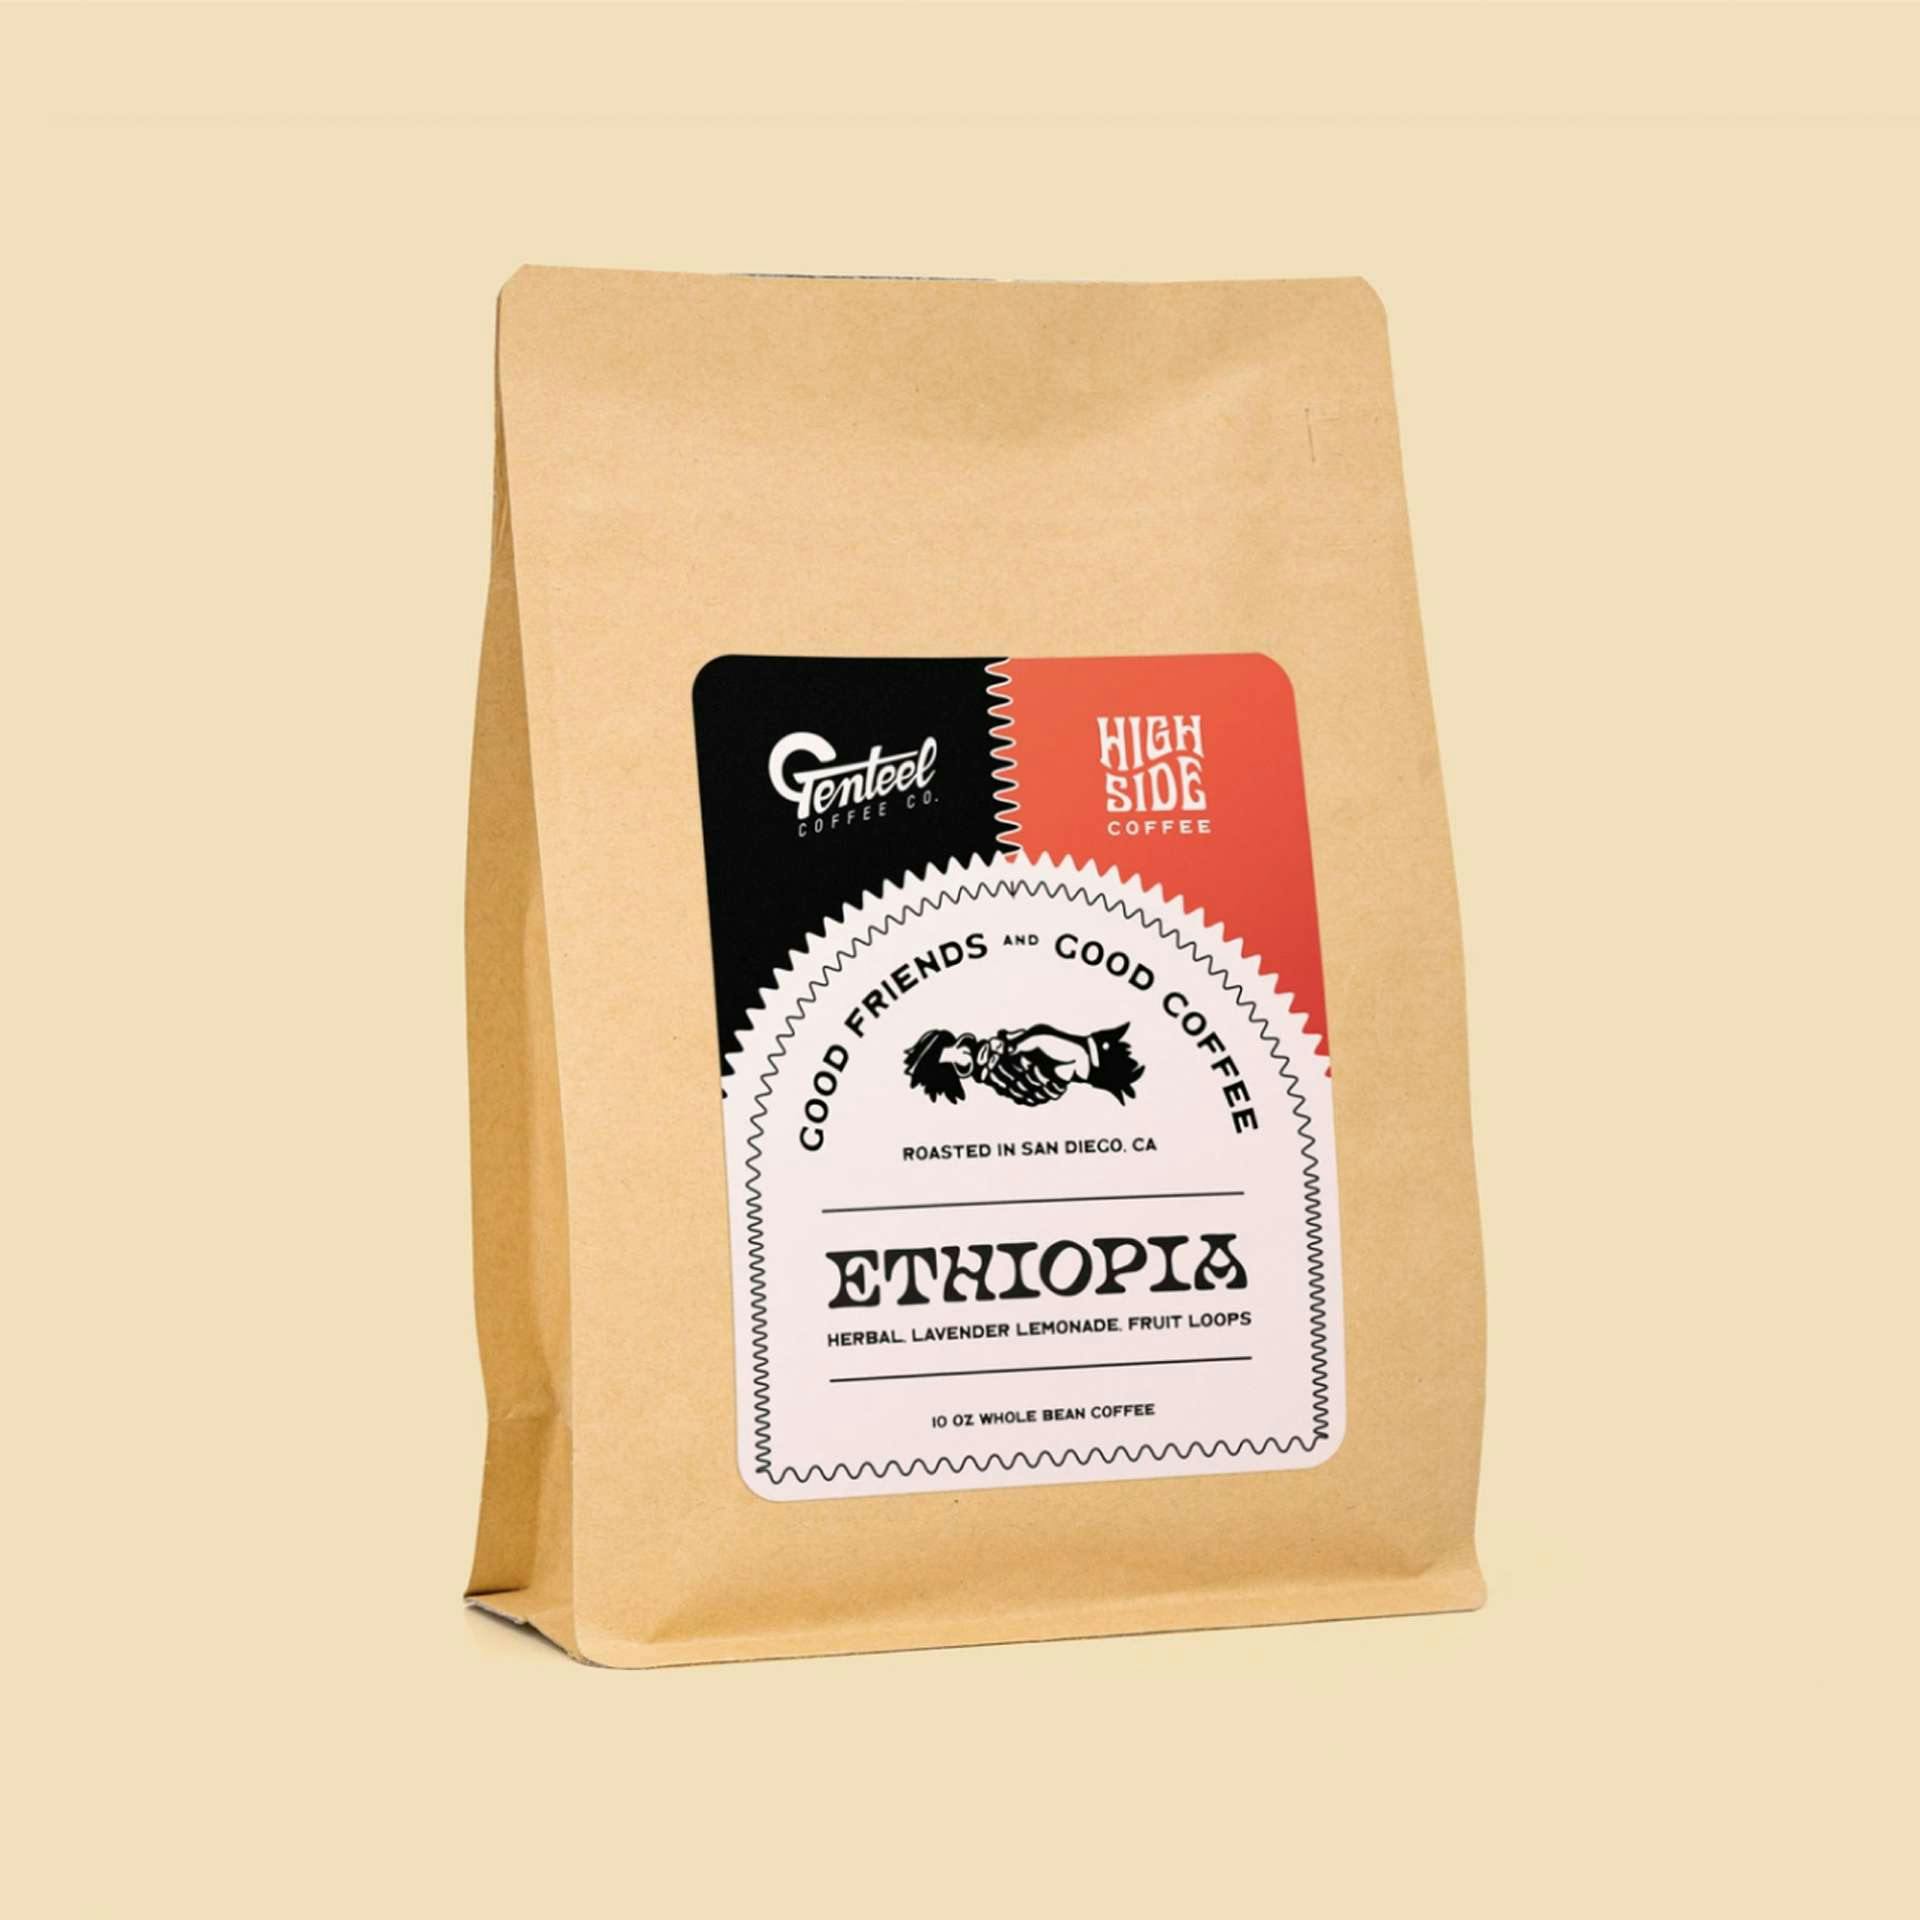 High Side coffee Ethiopia brew packaging